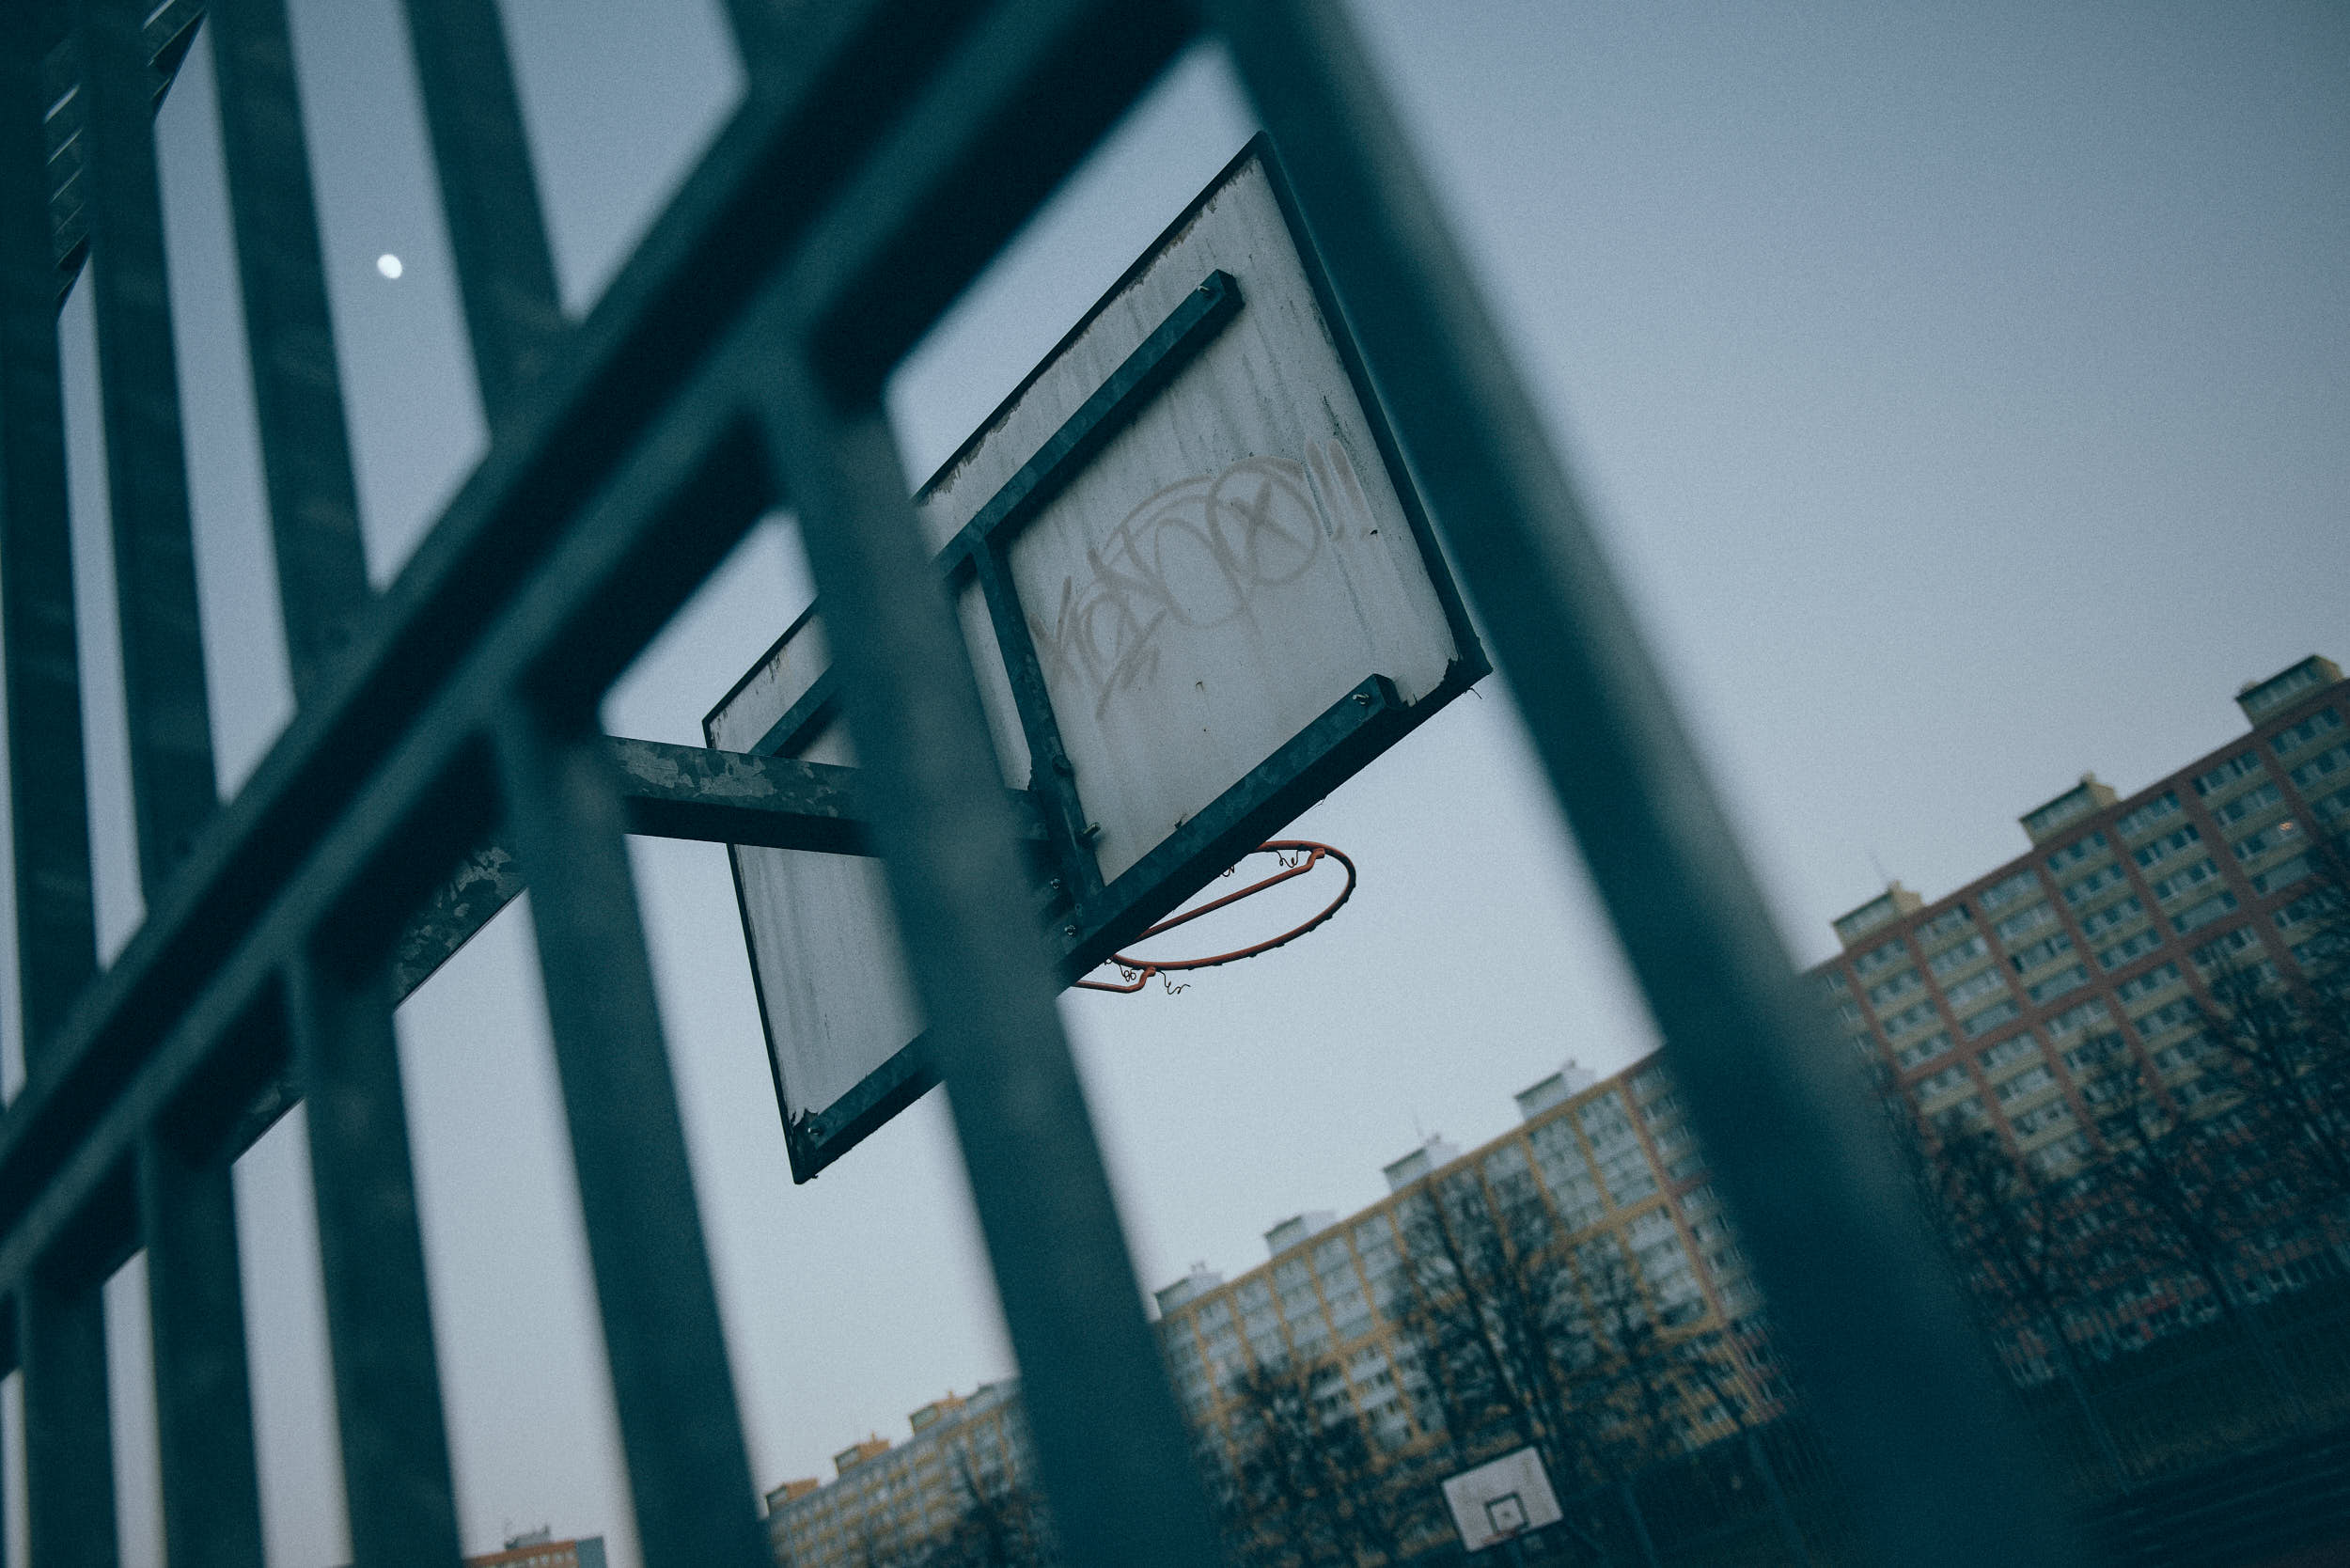 Trashed basketball hoop shot through metal fence.